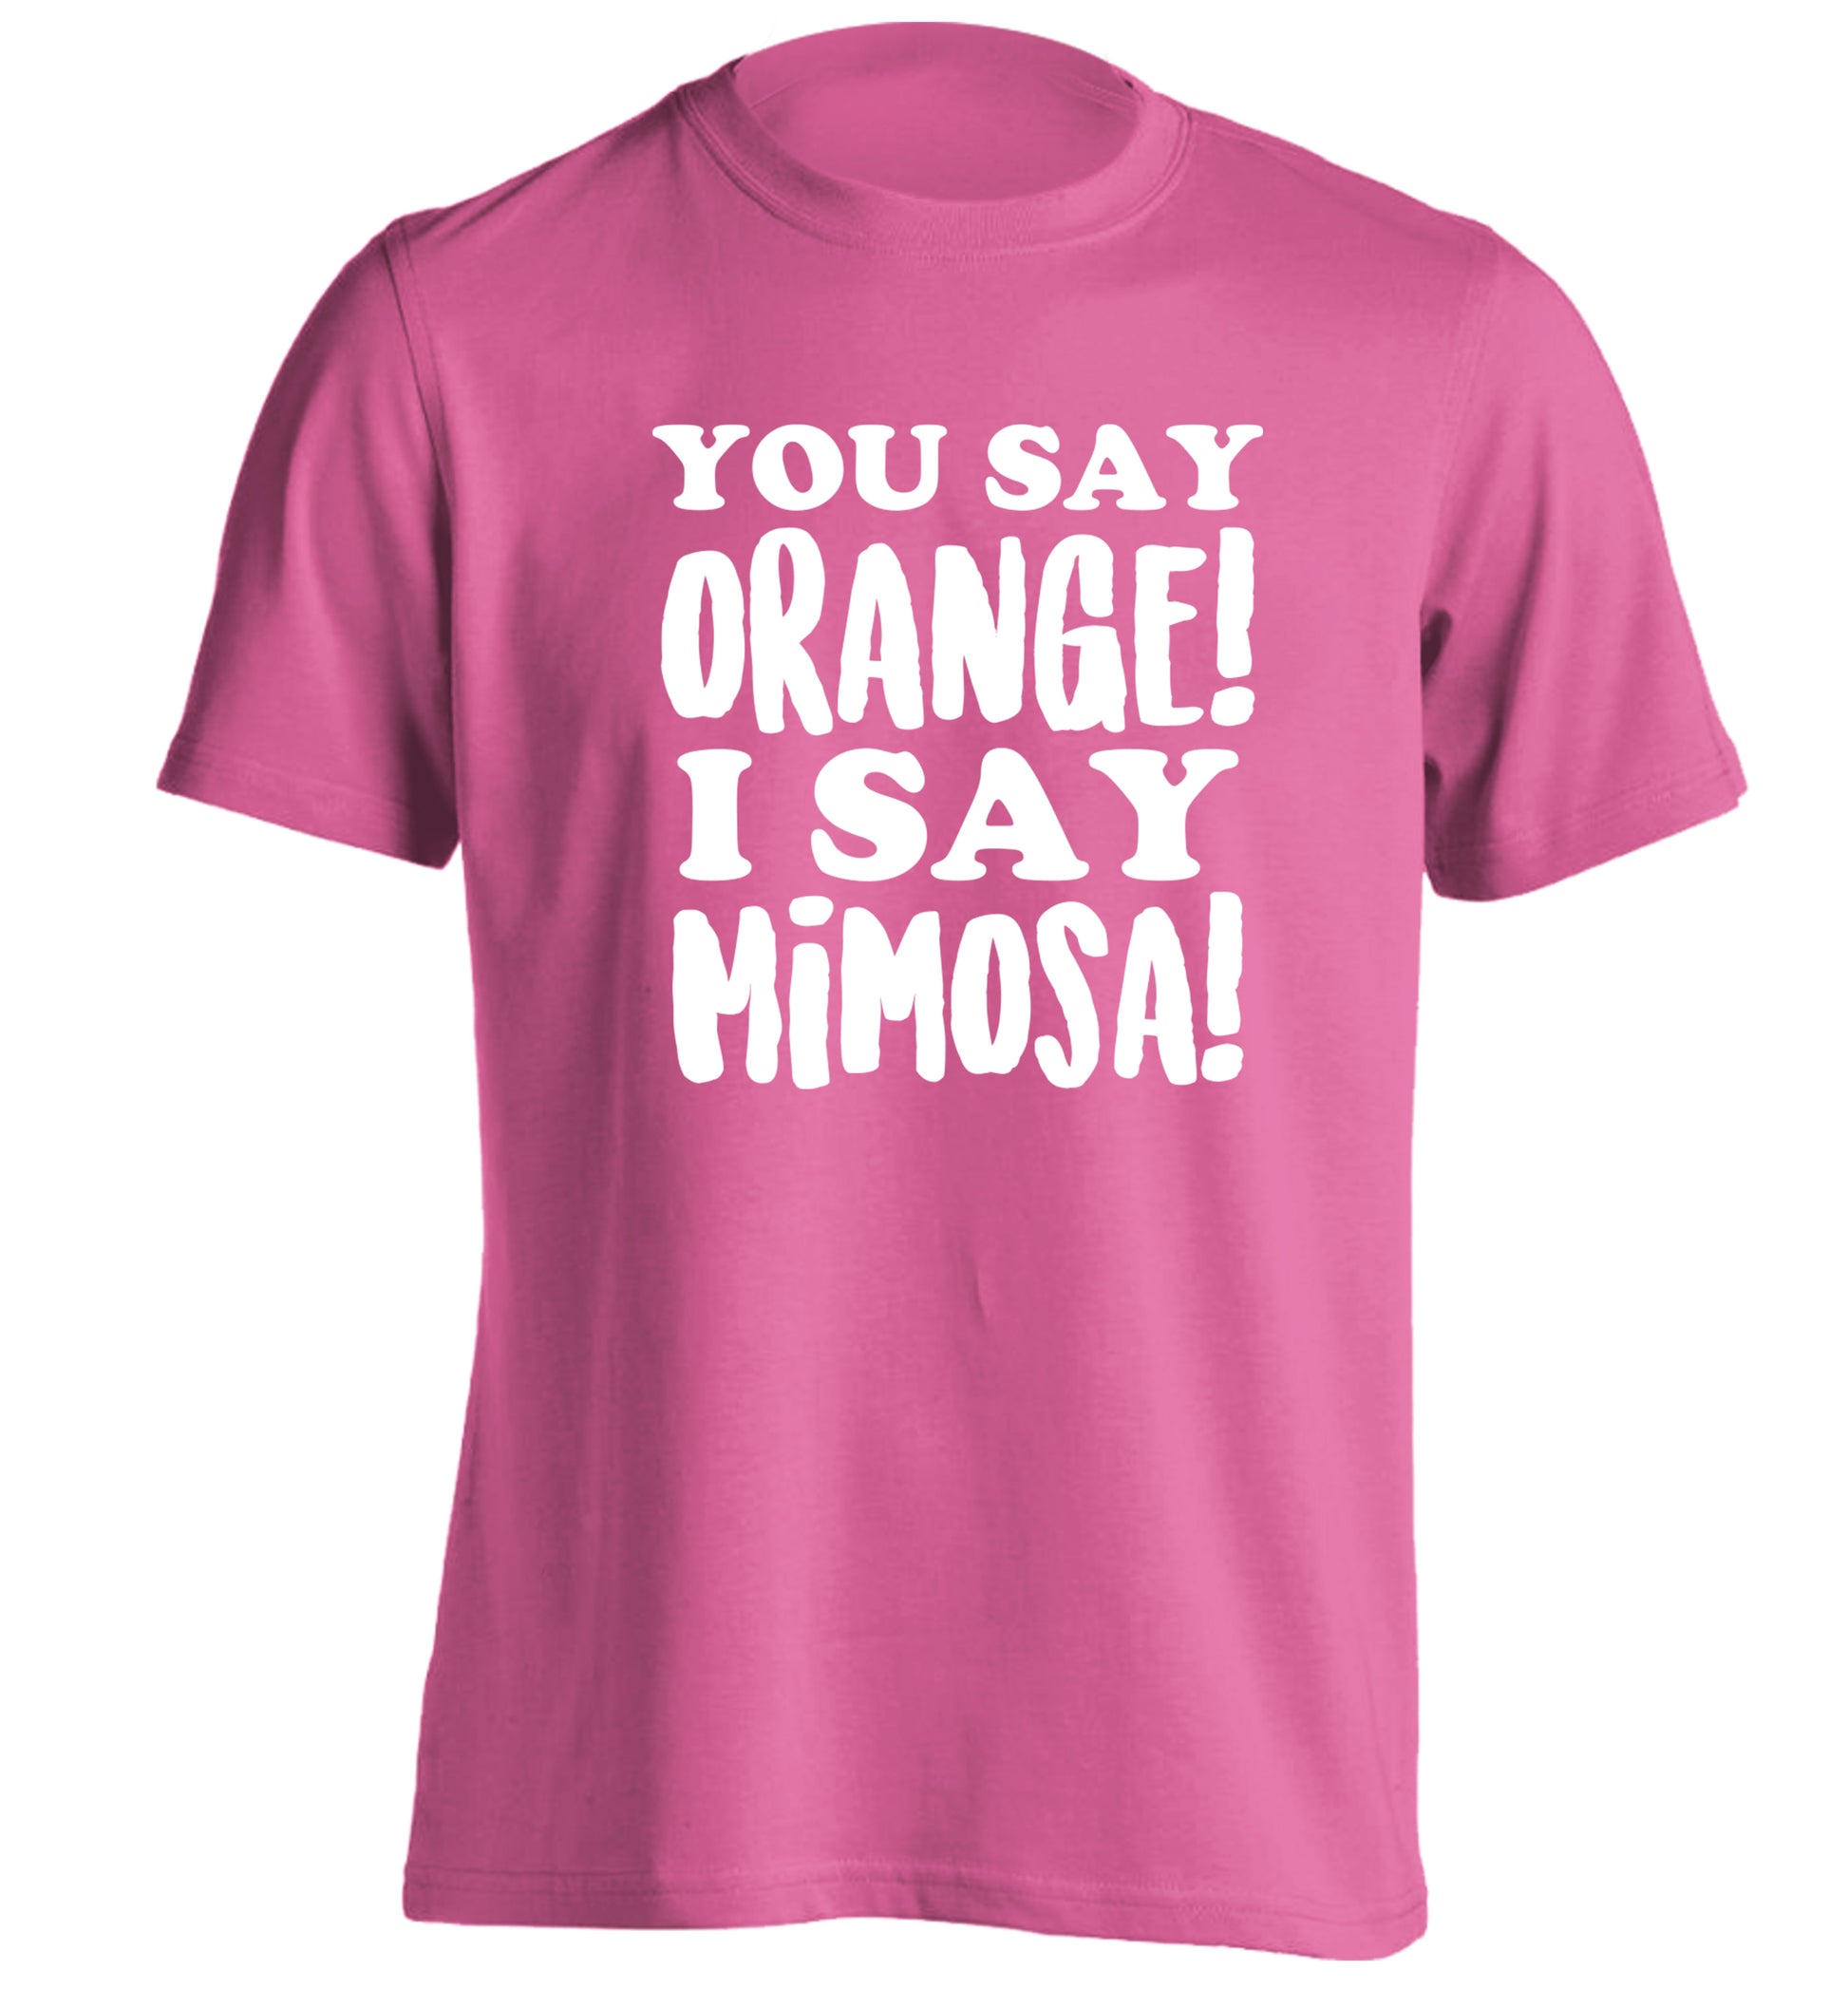 You say orange I say mimosa! adults unisex pink Tshirt 2XL